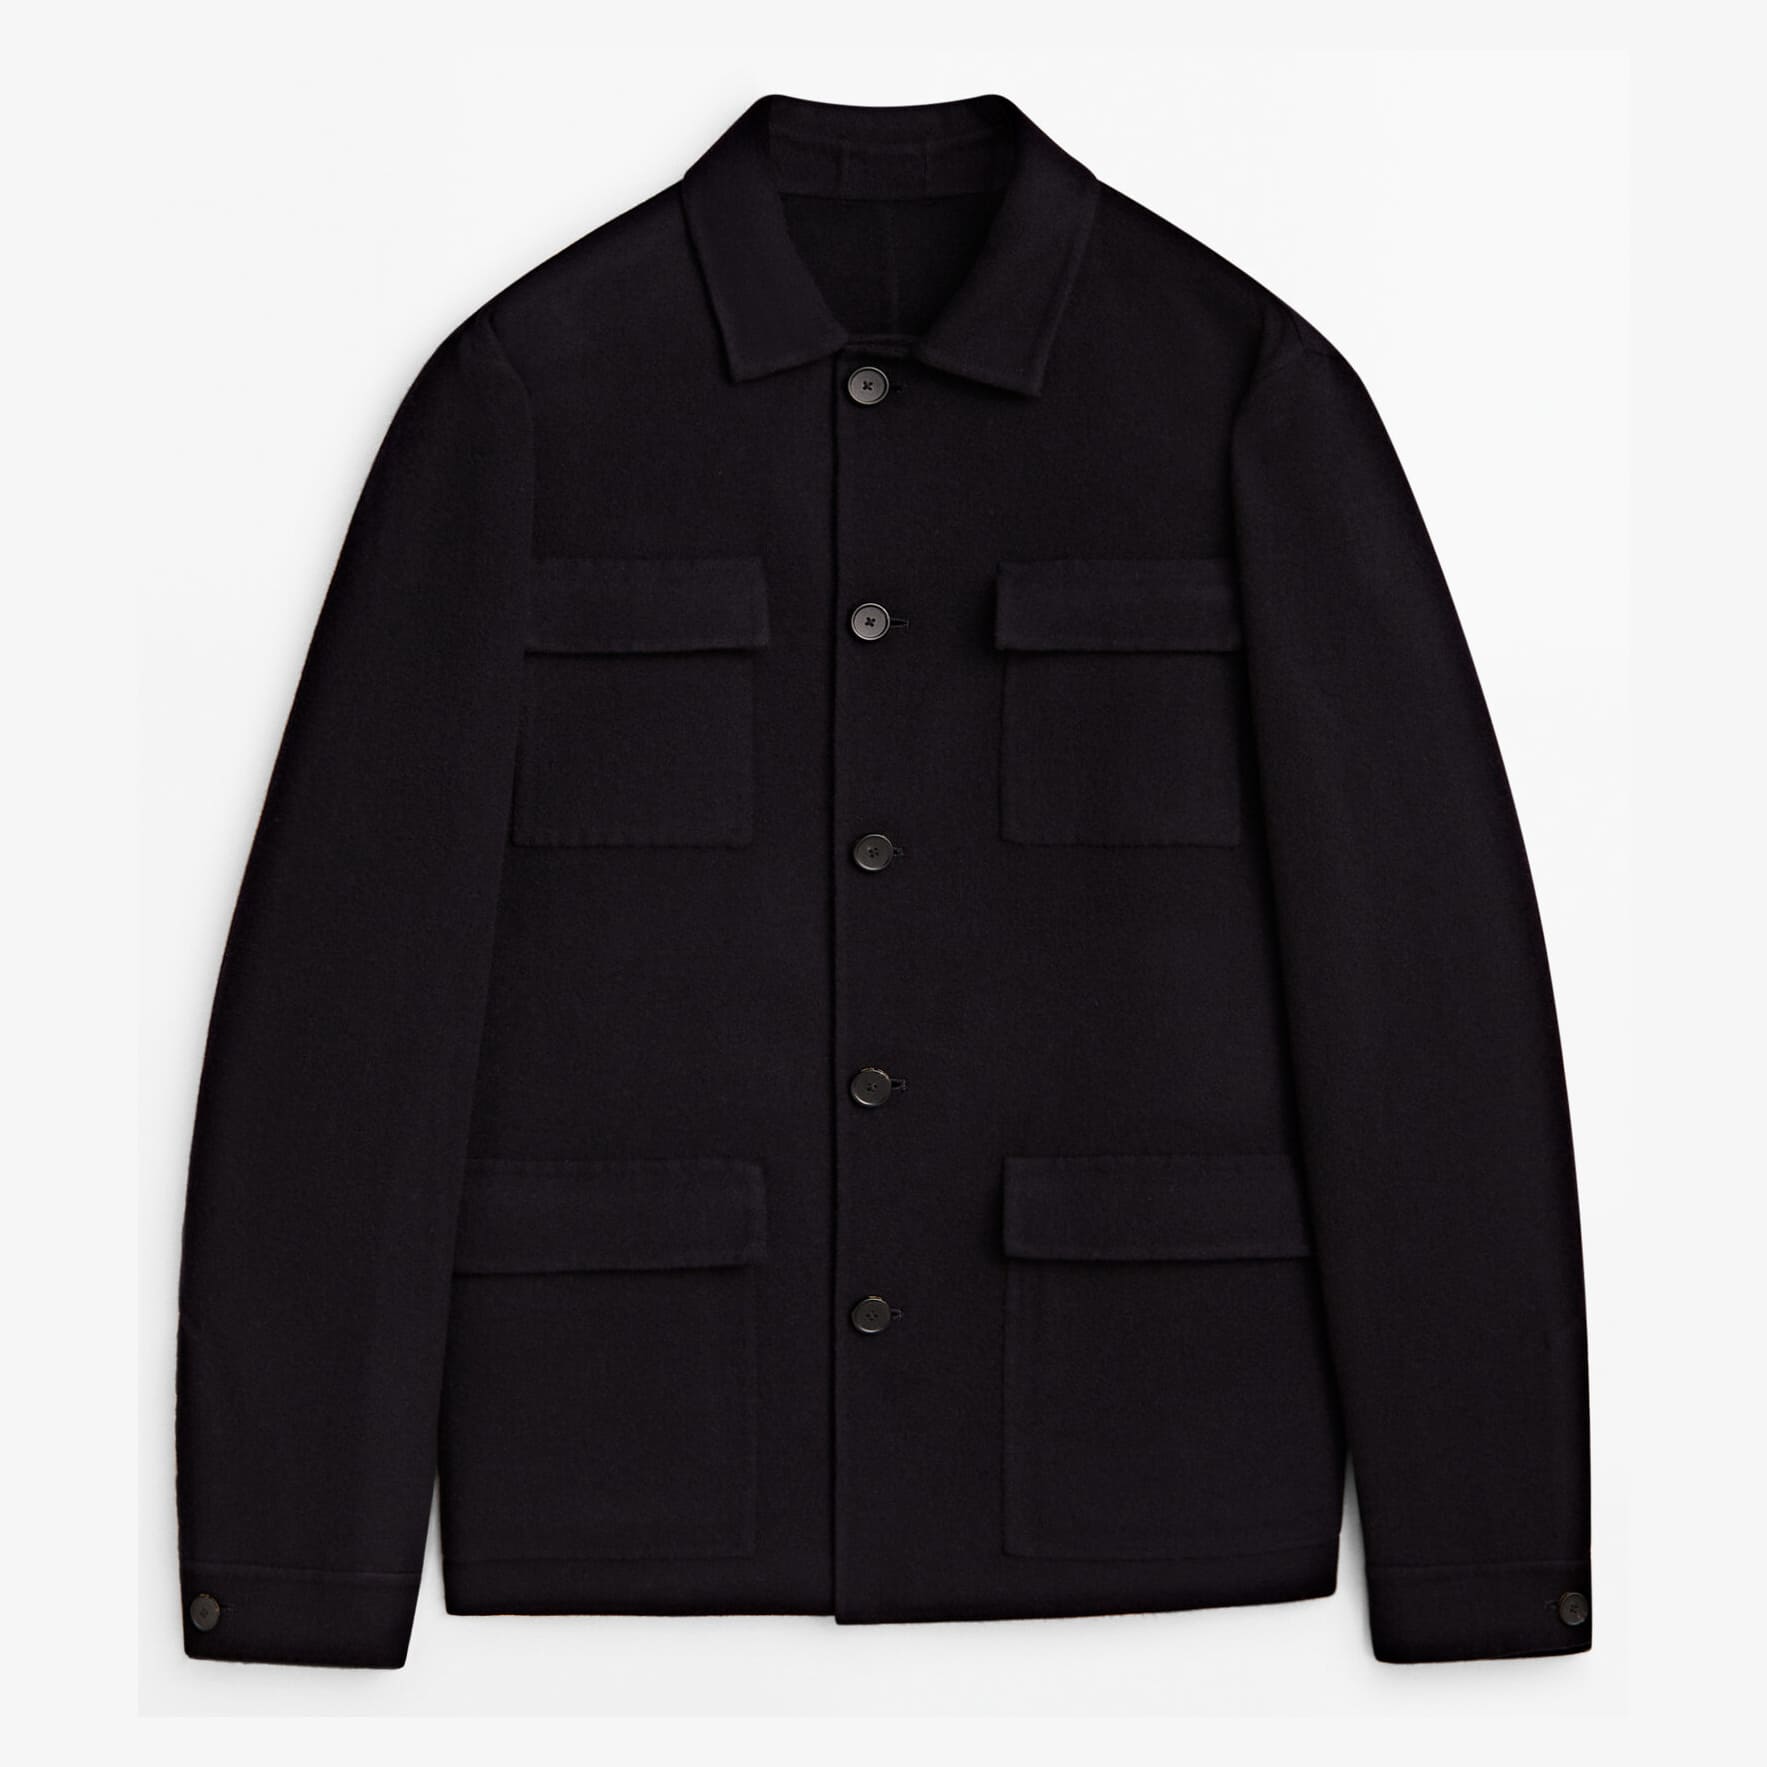 Куртка-рубашка Massimo Dutti Wool With Pockets, темно-синий куртка massimo dutti double breasted with zip pockets темно синий